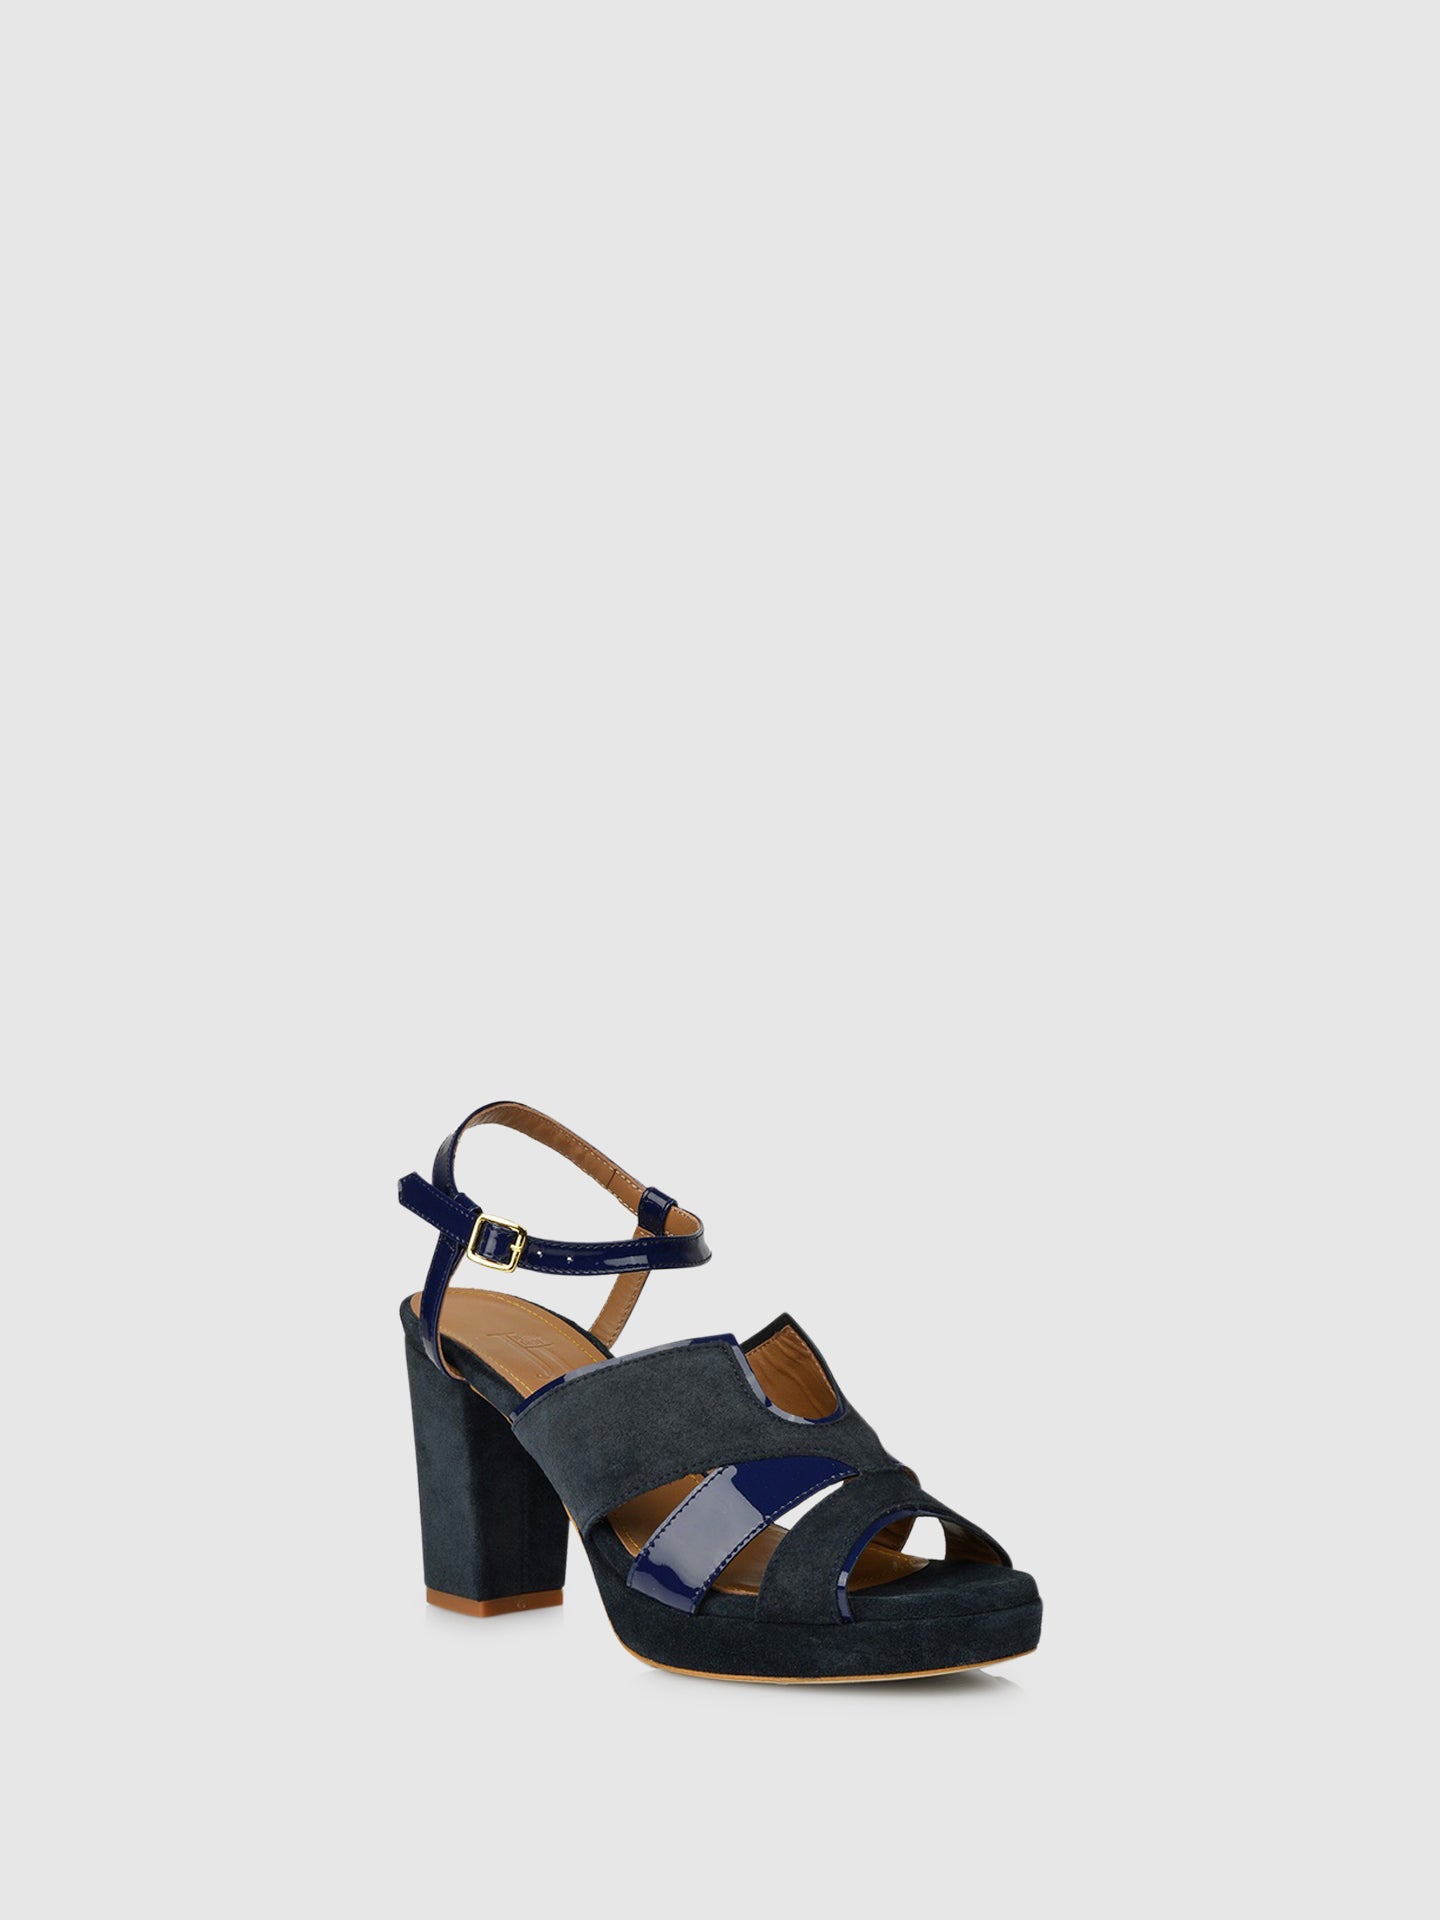 JJ Heitor Heel Sandals G04L1 Navy/Blue